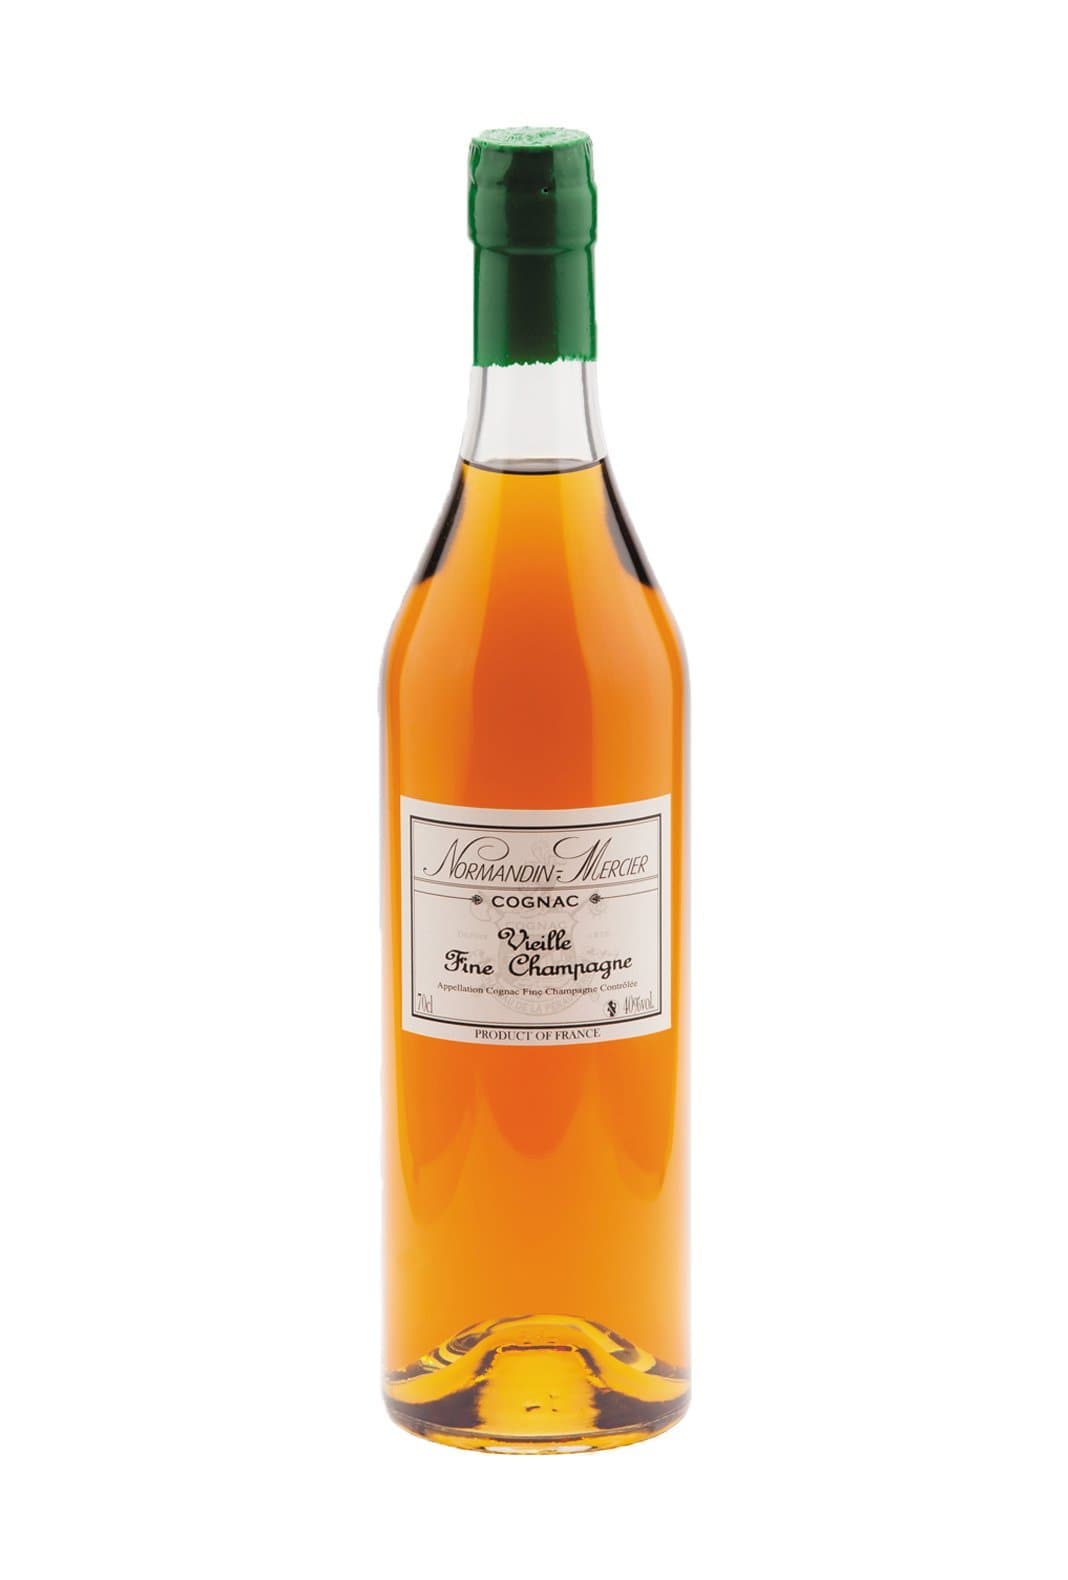 Normandin-Mercier Cognac 15 years Vieille Fine Champagne 40% 700ml | Brandy | Shop online at Spirits of France